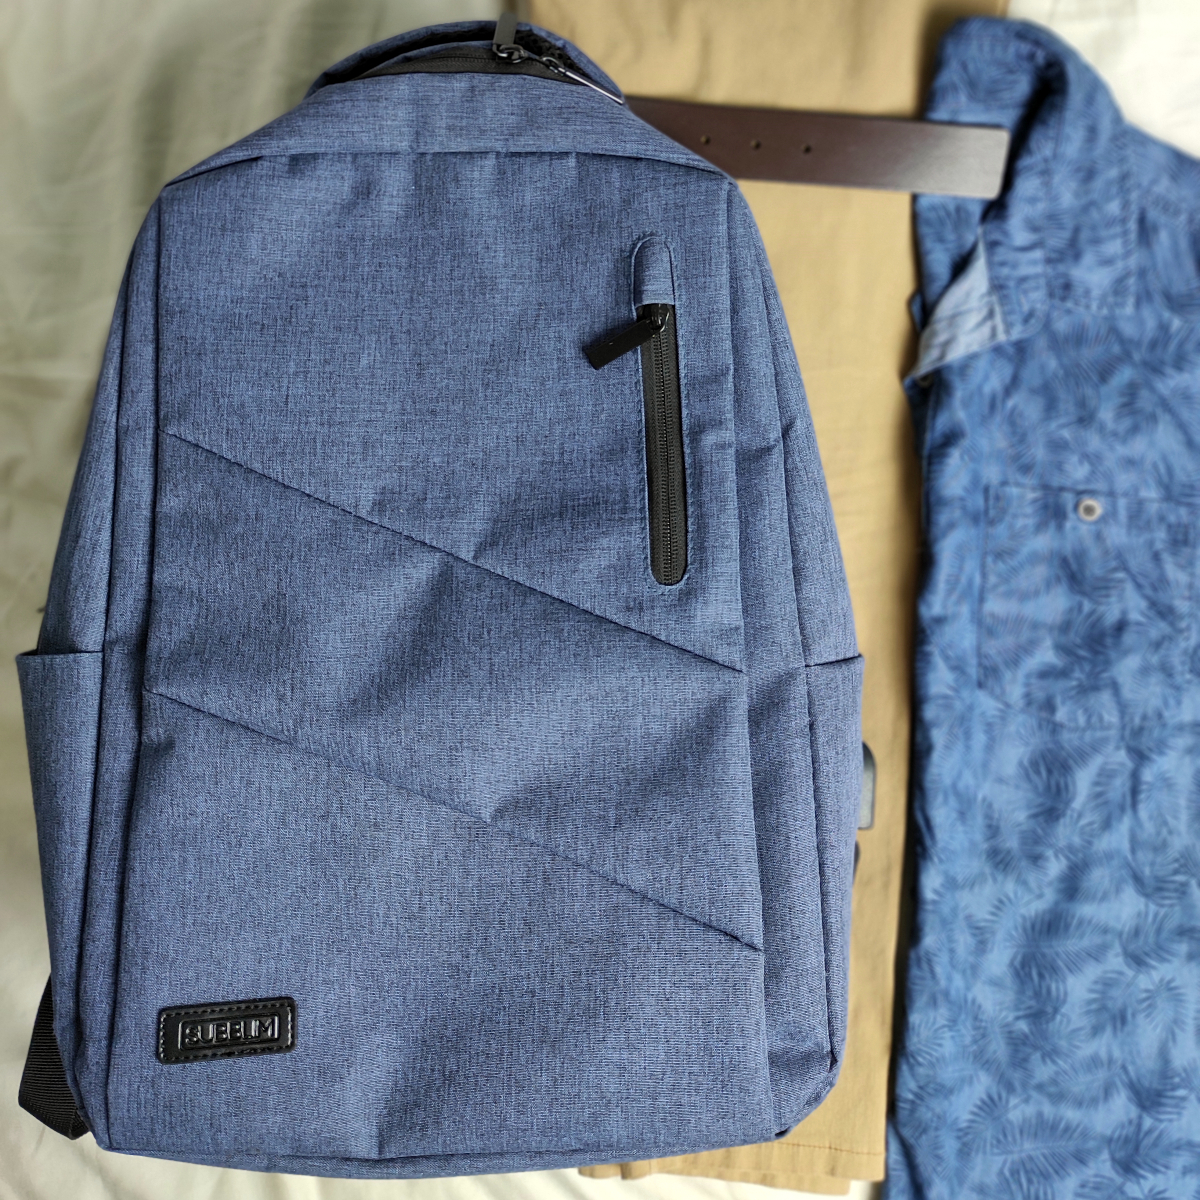 mochila azul para portatil subblim con pantalon camel de pinzas y camisa azul tejano de manga corta